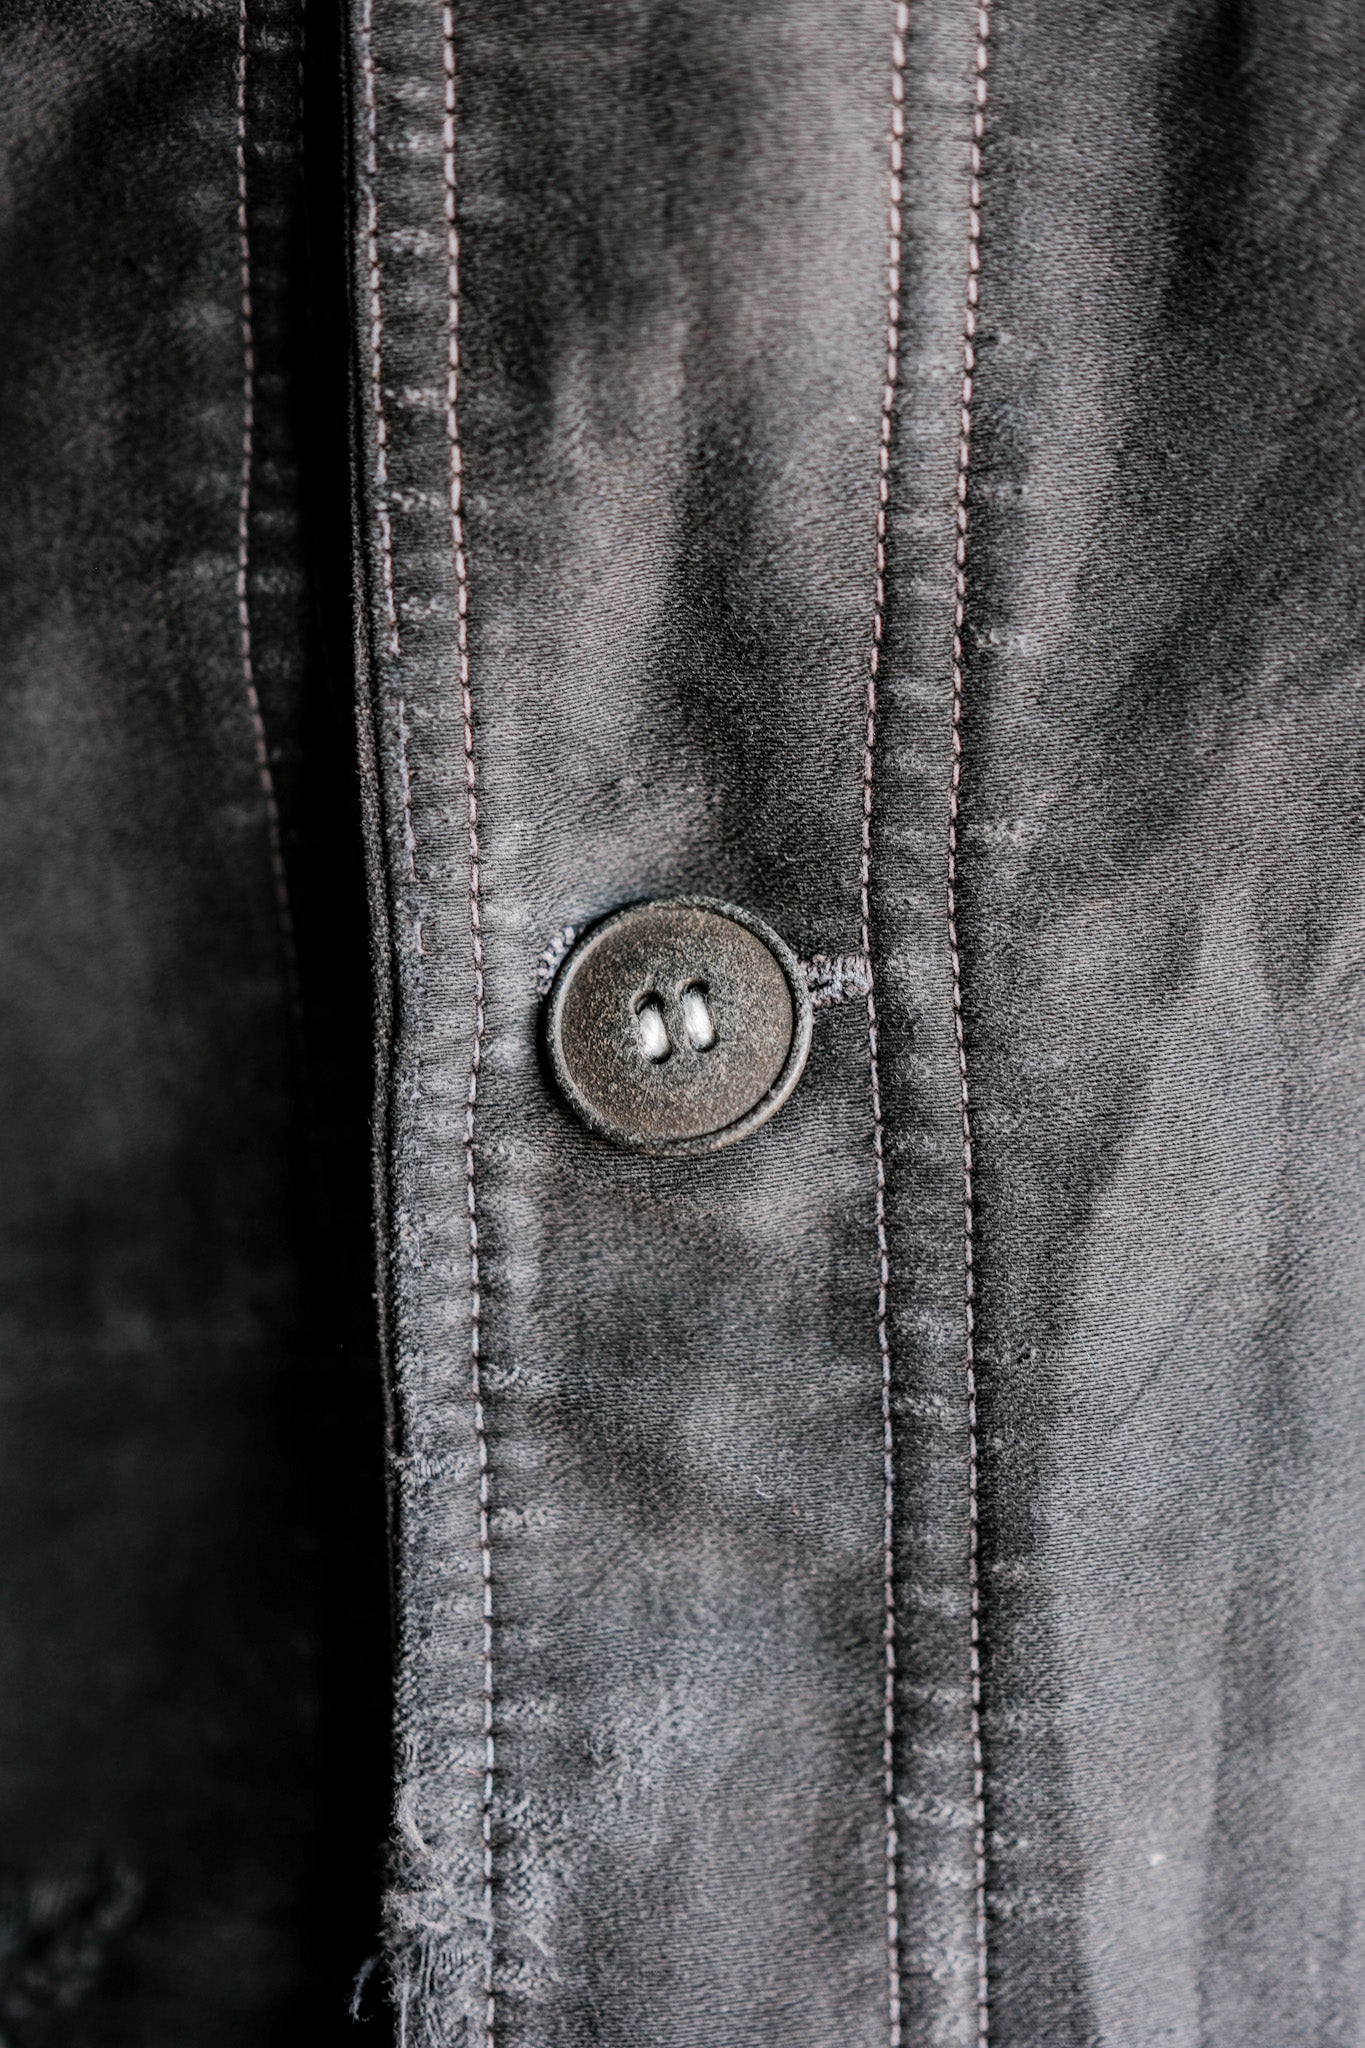 【~40's】French Vintage Black Moleskin Work Jacket "Le Mont St. Michel"